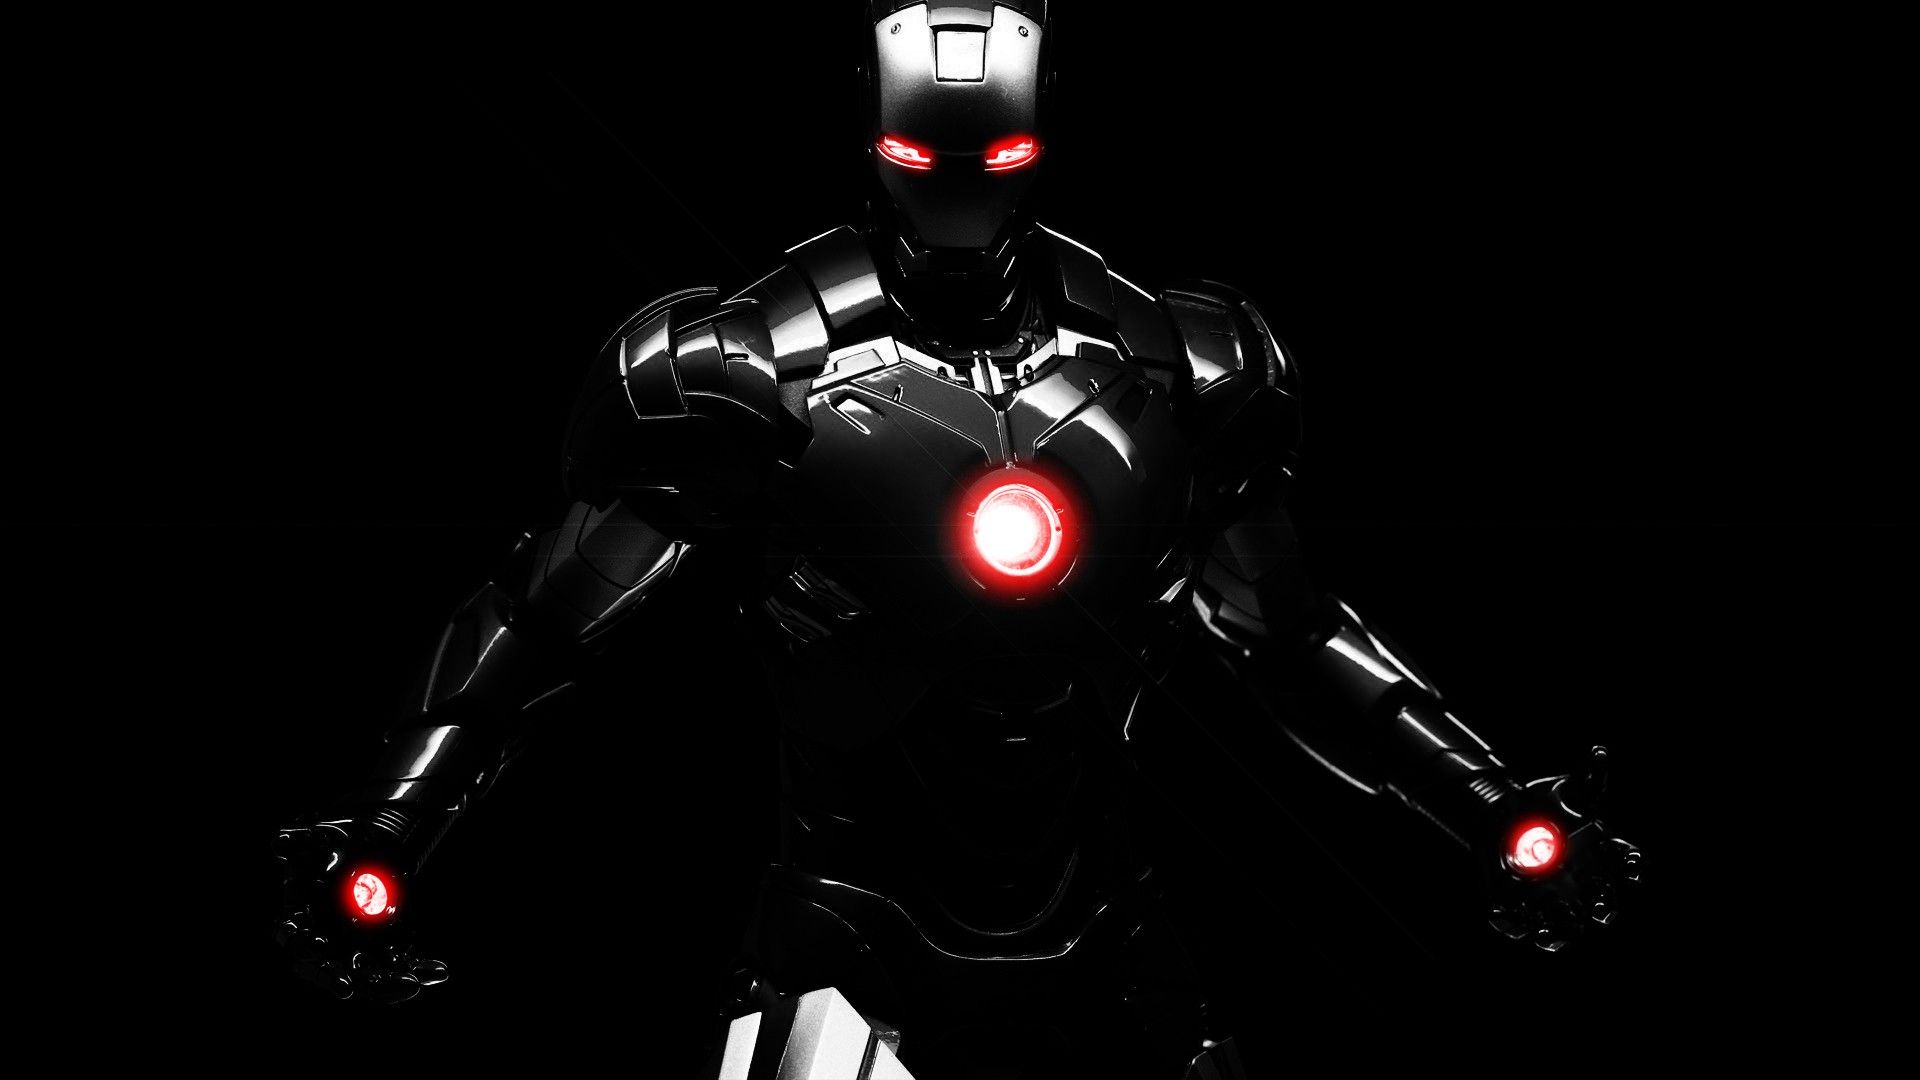 Iron Wallpaper. Iron Man iPhone Wallpaper, Iron Man Wallpaper and Iron Man Movies Wallpaper